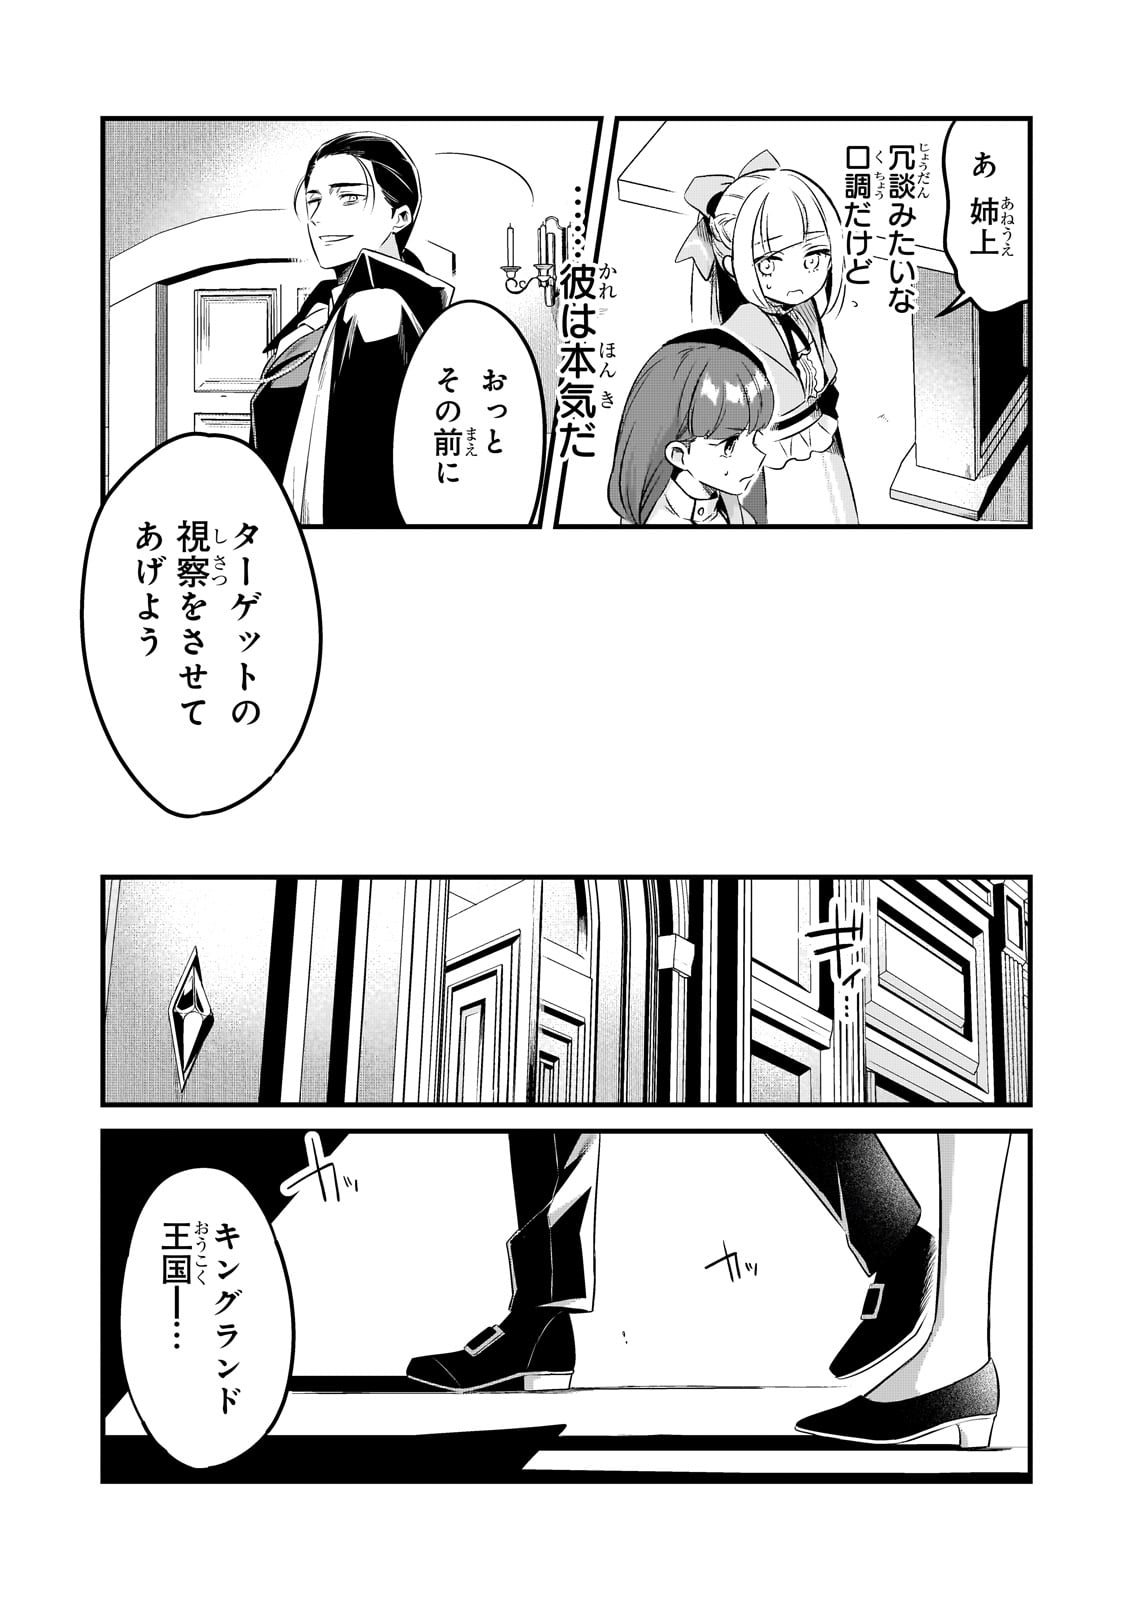 Tsuihousha Shokudou e Youkoso! - Chapter 42 - Page 3